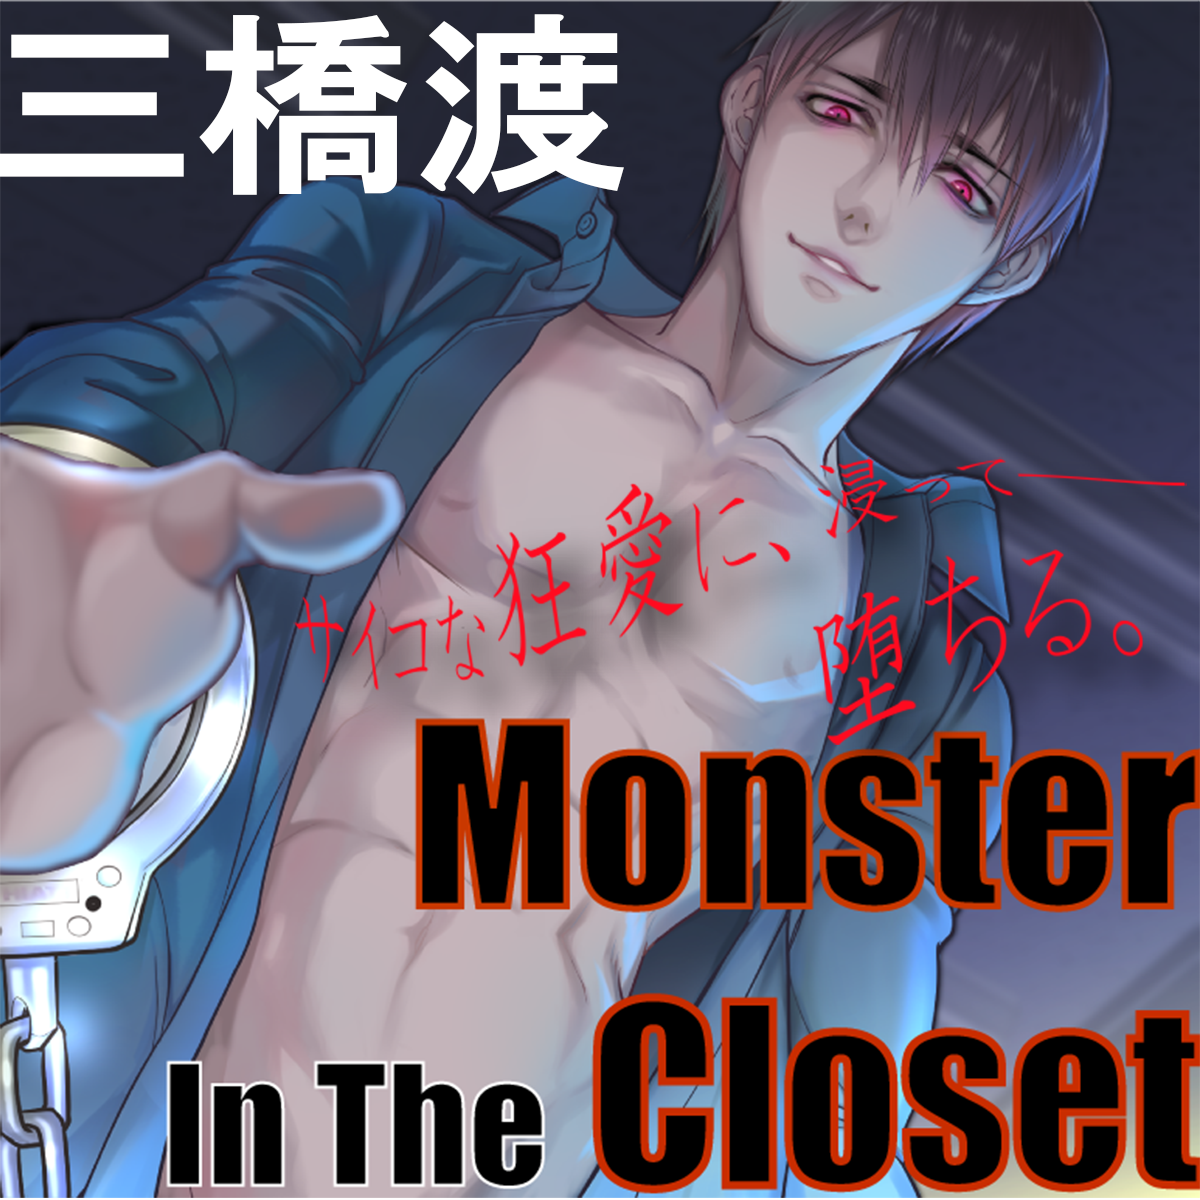 【監禁凌辱】Monster In The Closet【CV:三橋渡】